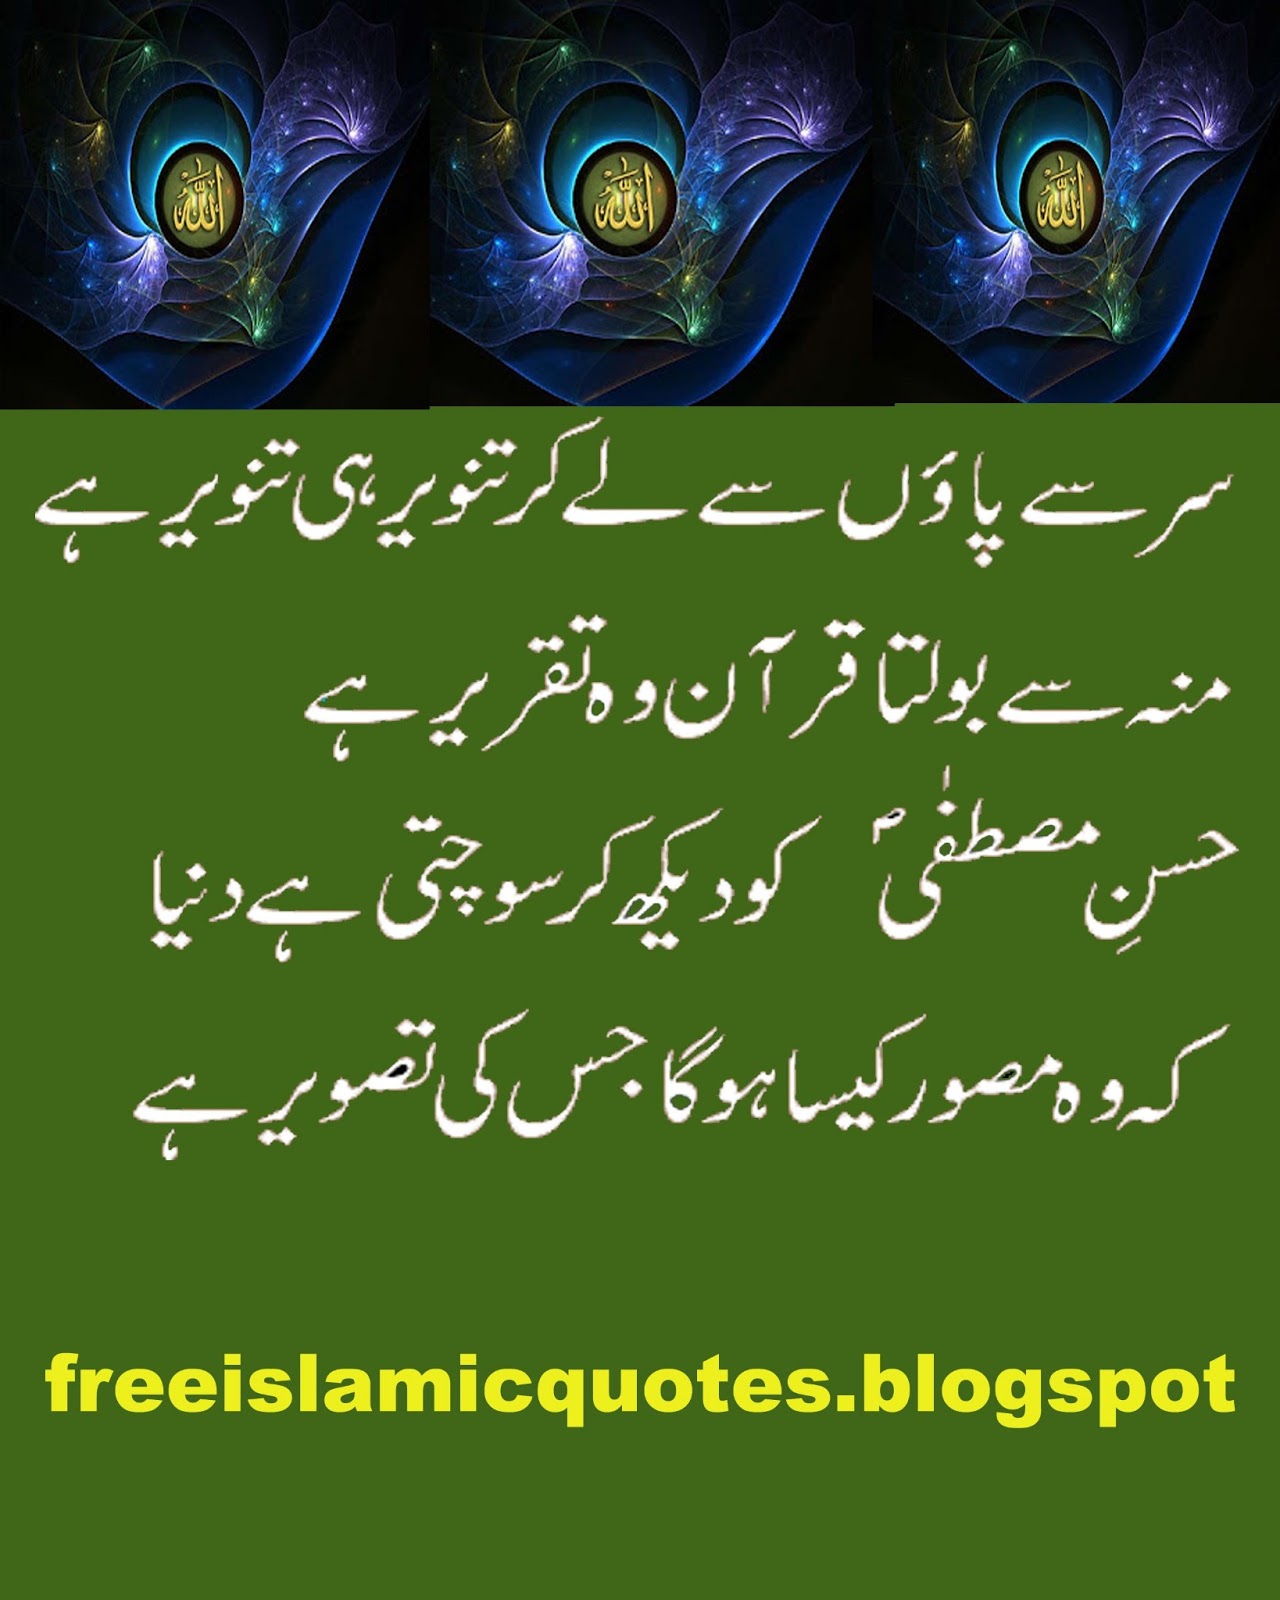 Islamic Quotes In Urdu Wallpaper Beautiful